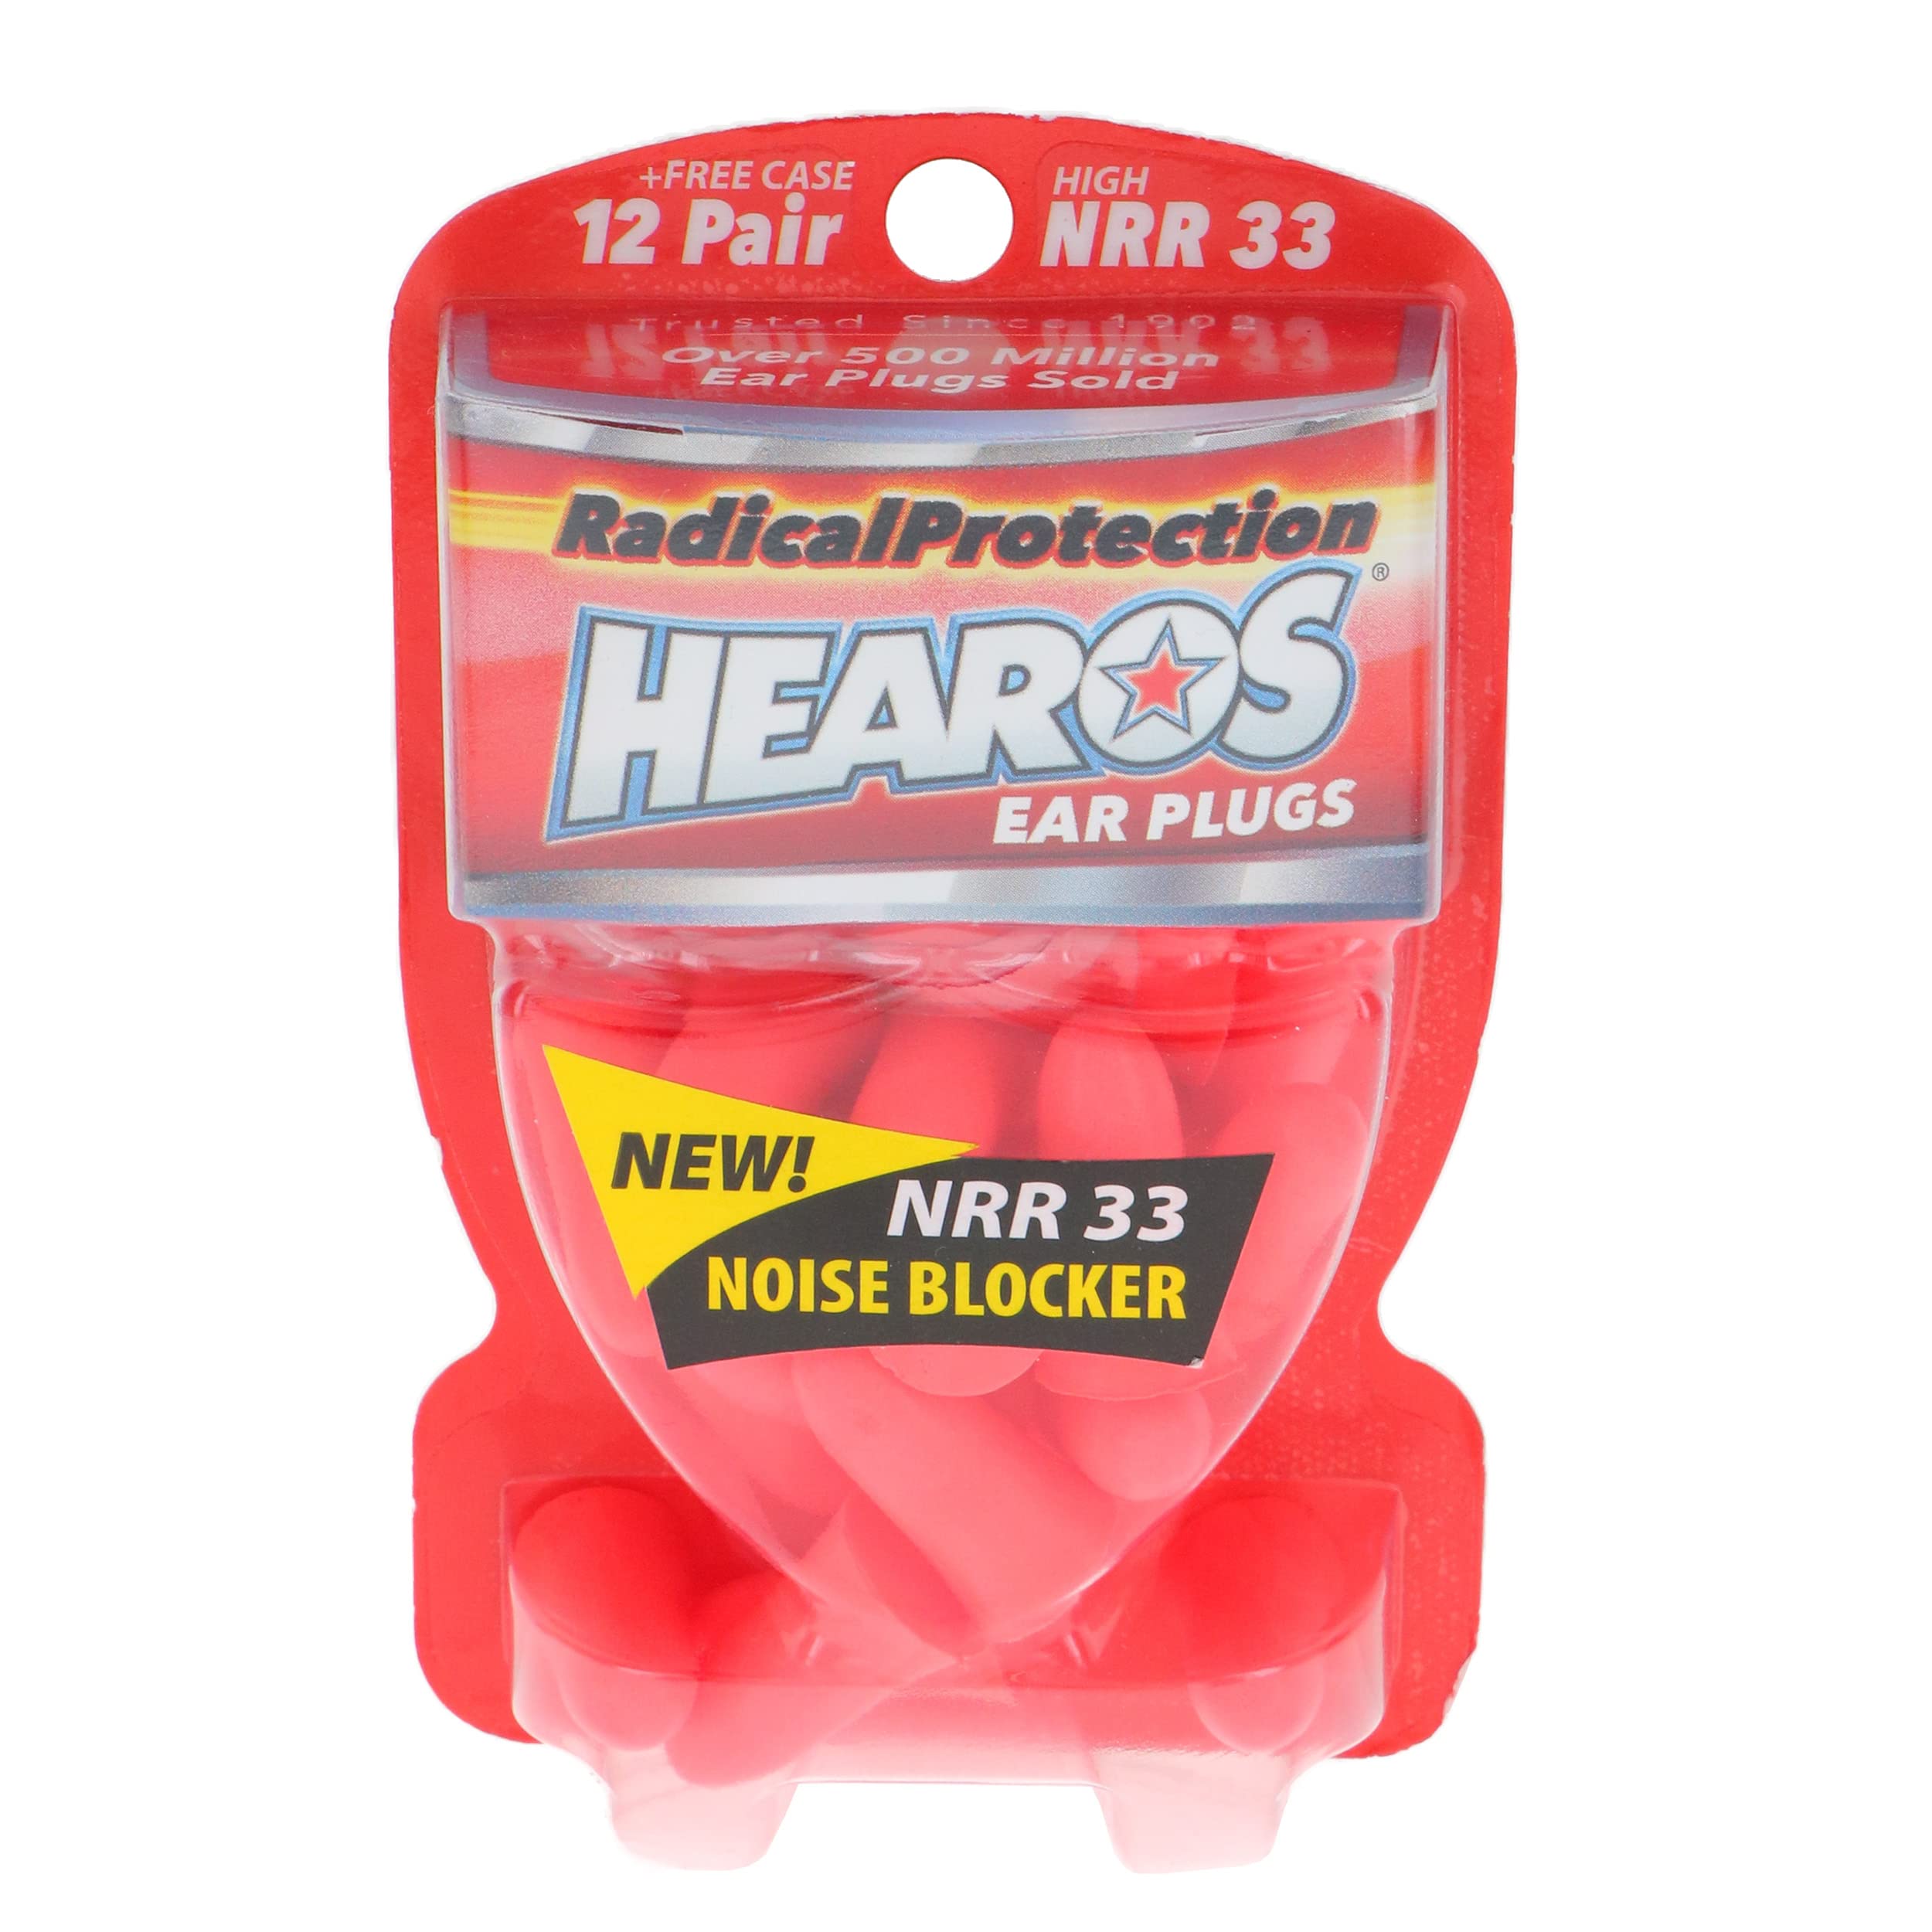 Hearos Radical Protection Foam Ear Plugs, Hearing Protection, NRR 33, 12 Pair, Orange (5801)